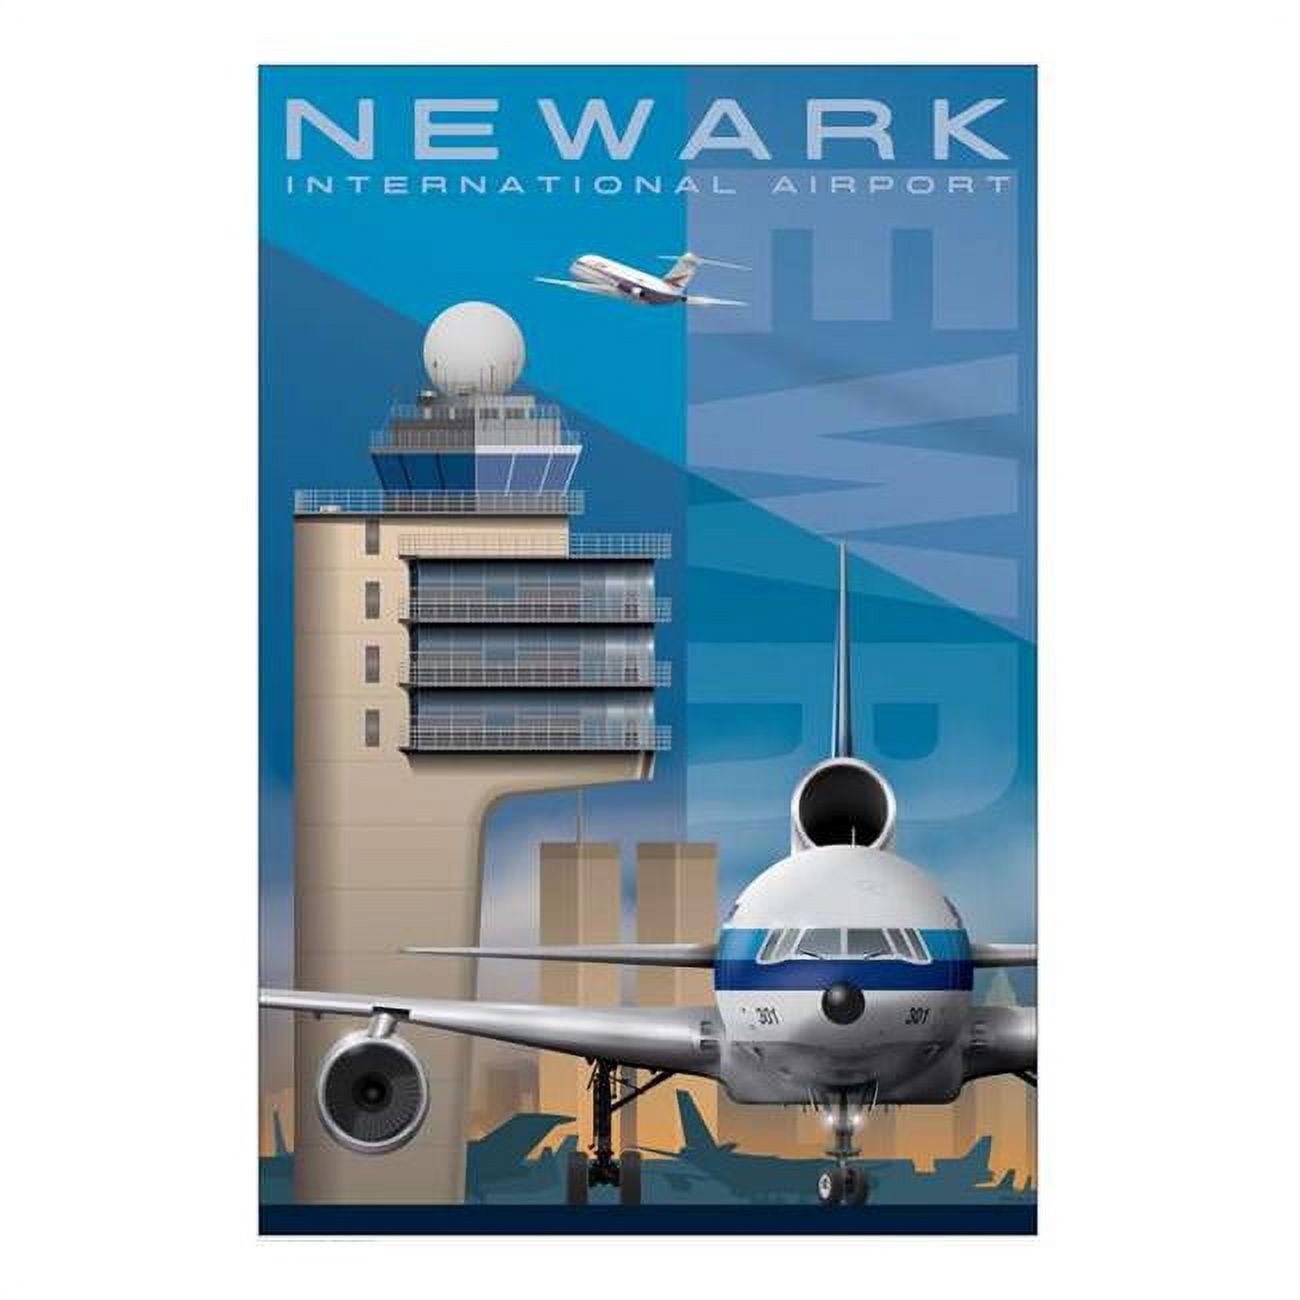 Ja074 Ewr Newark Airport Poster Eastern L1011 Model Airplane